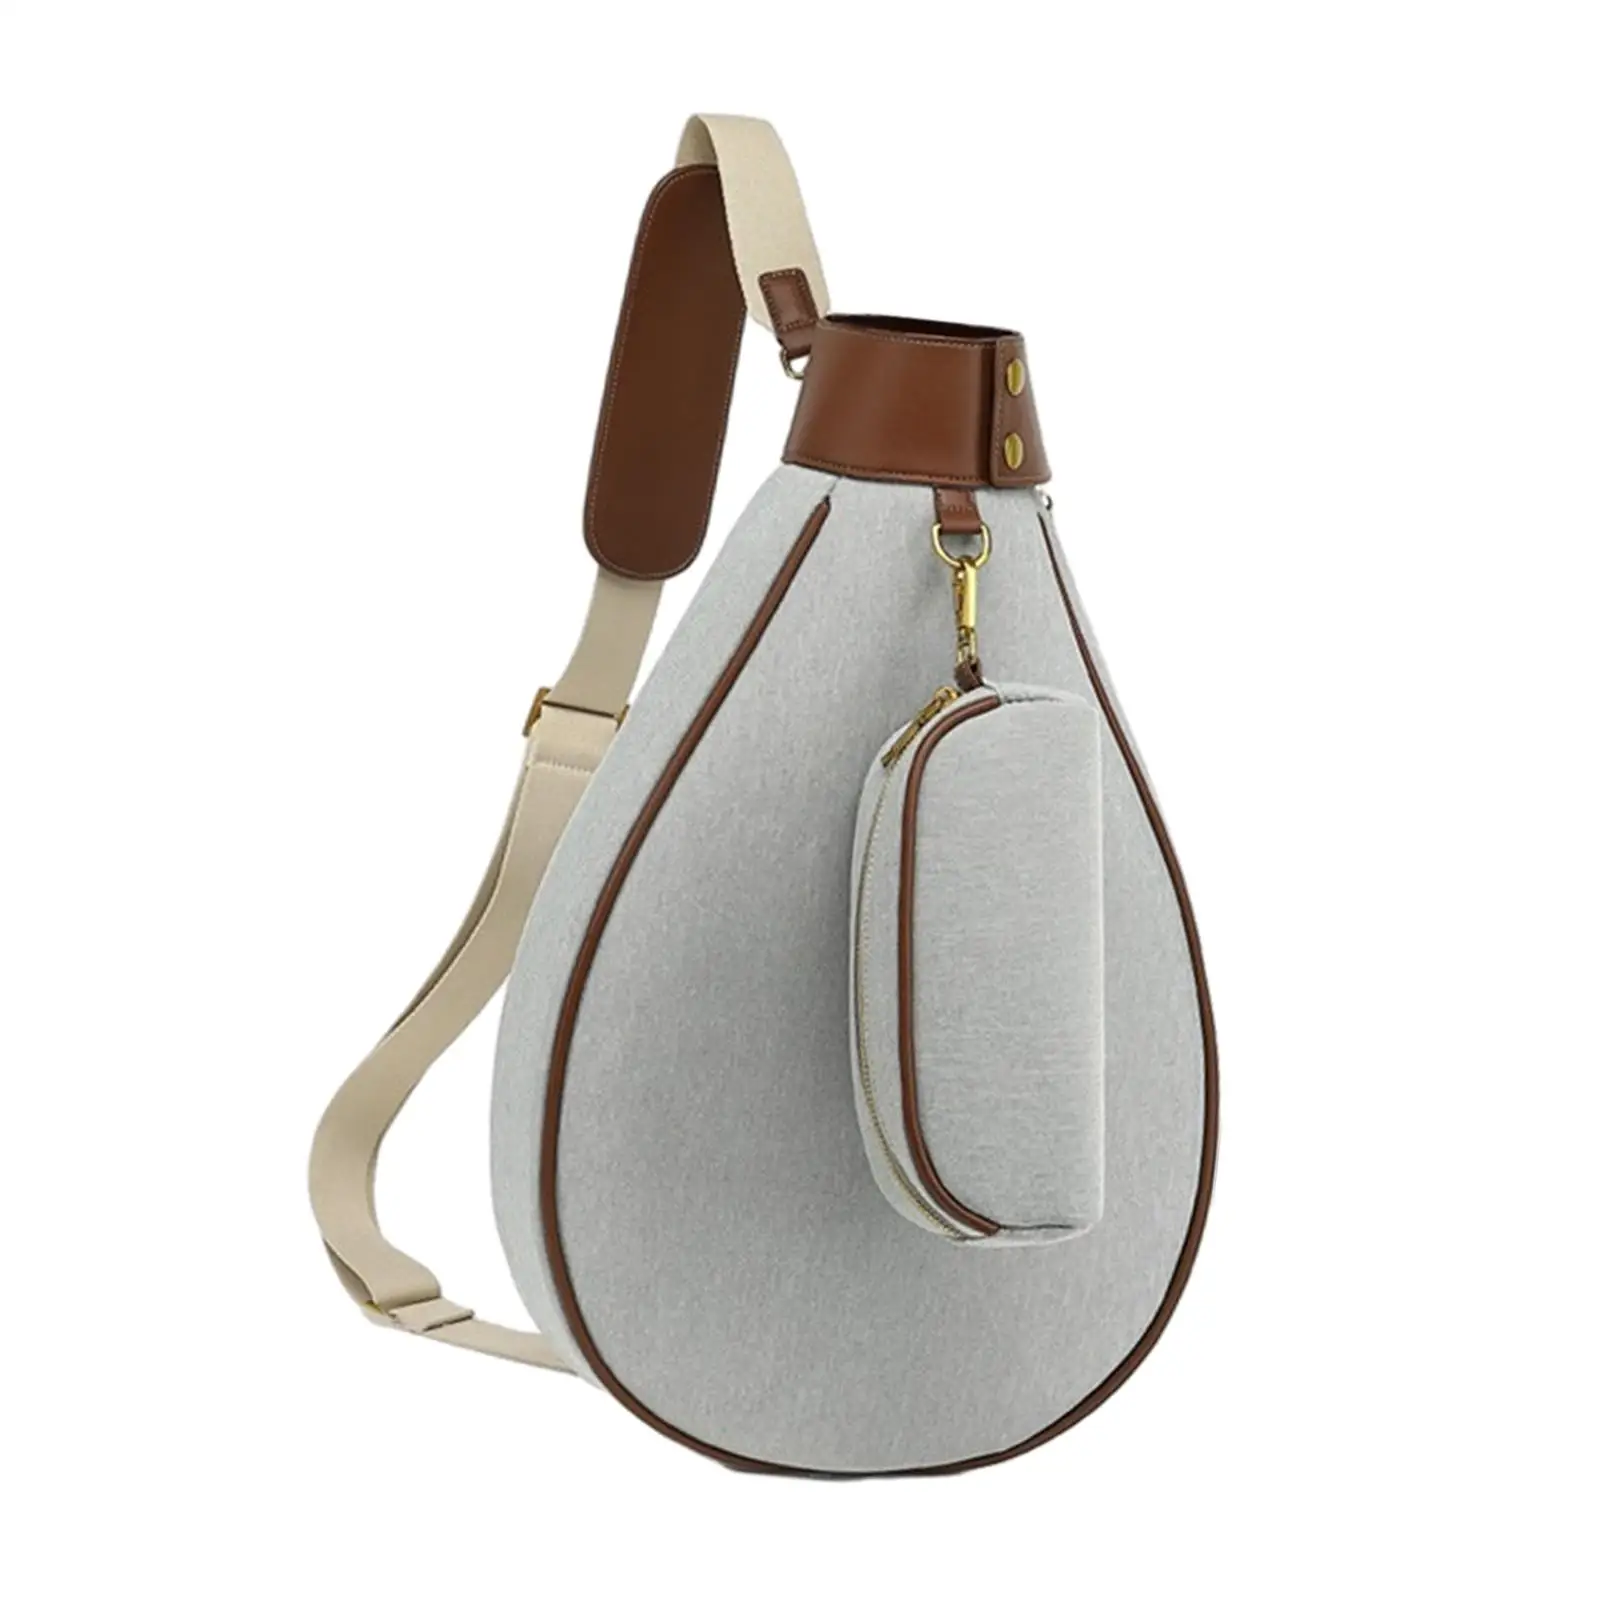 Tennis Bag Durable Shoulder Bag Carrier Versatile Badminton Racquet Bag for Tennis Racket, Pickleball Paddles, Badminton Racquet